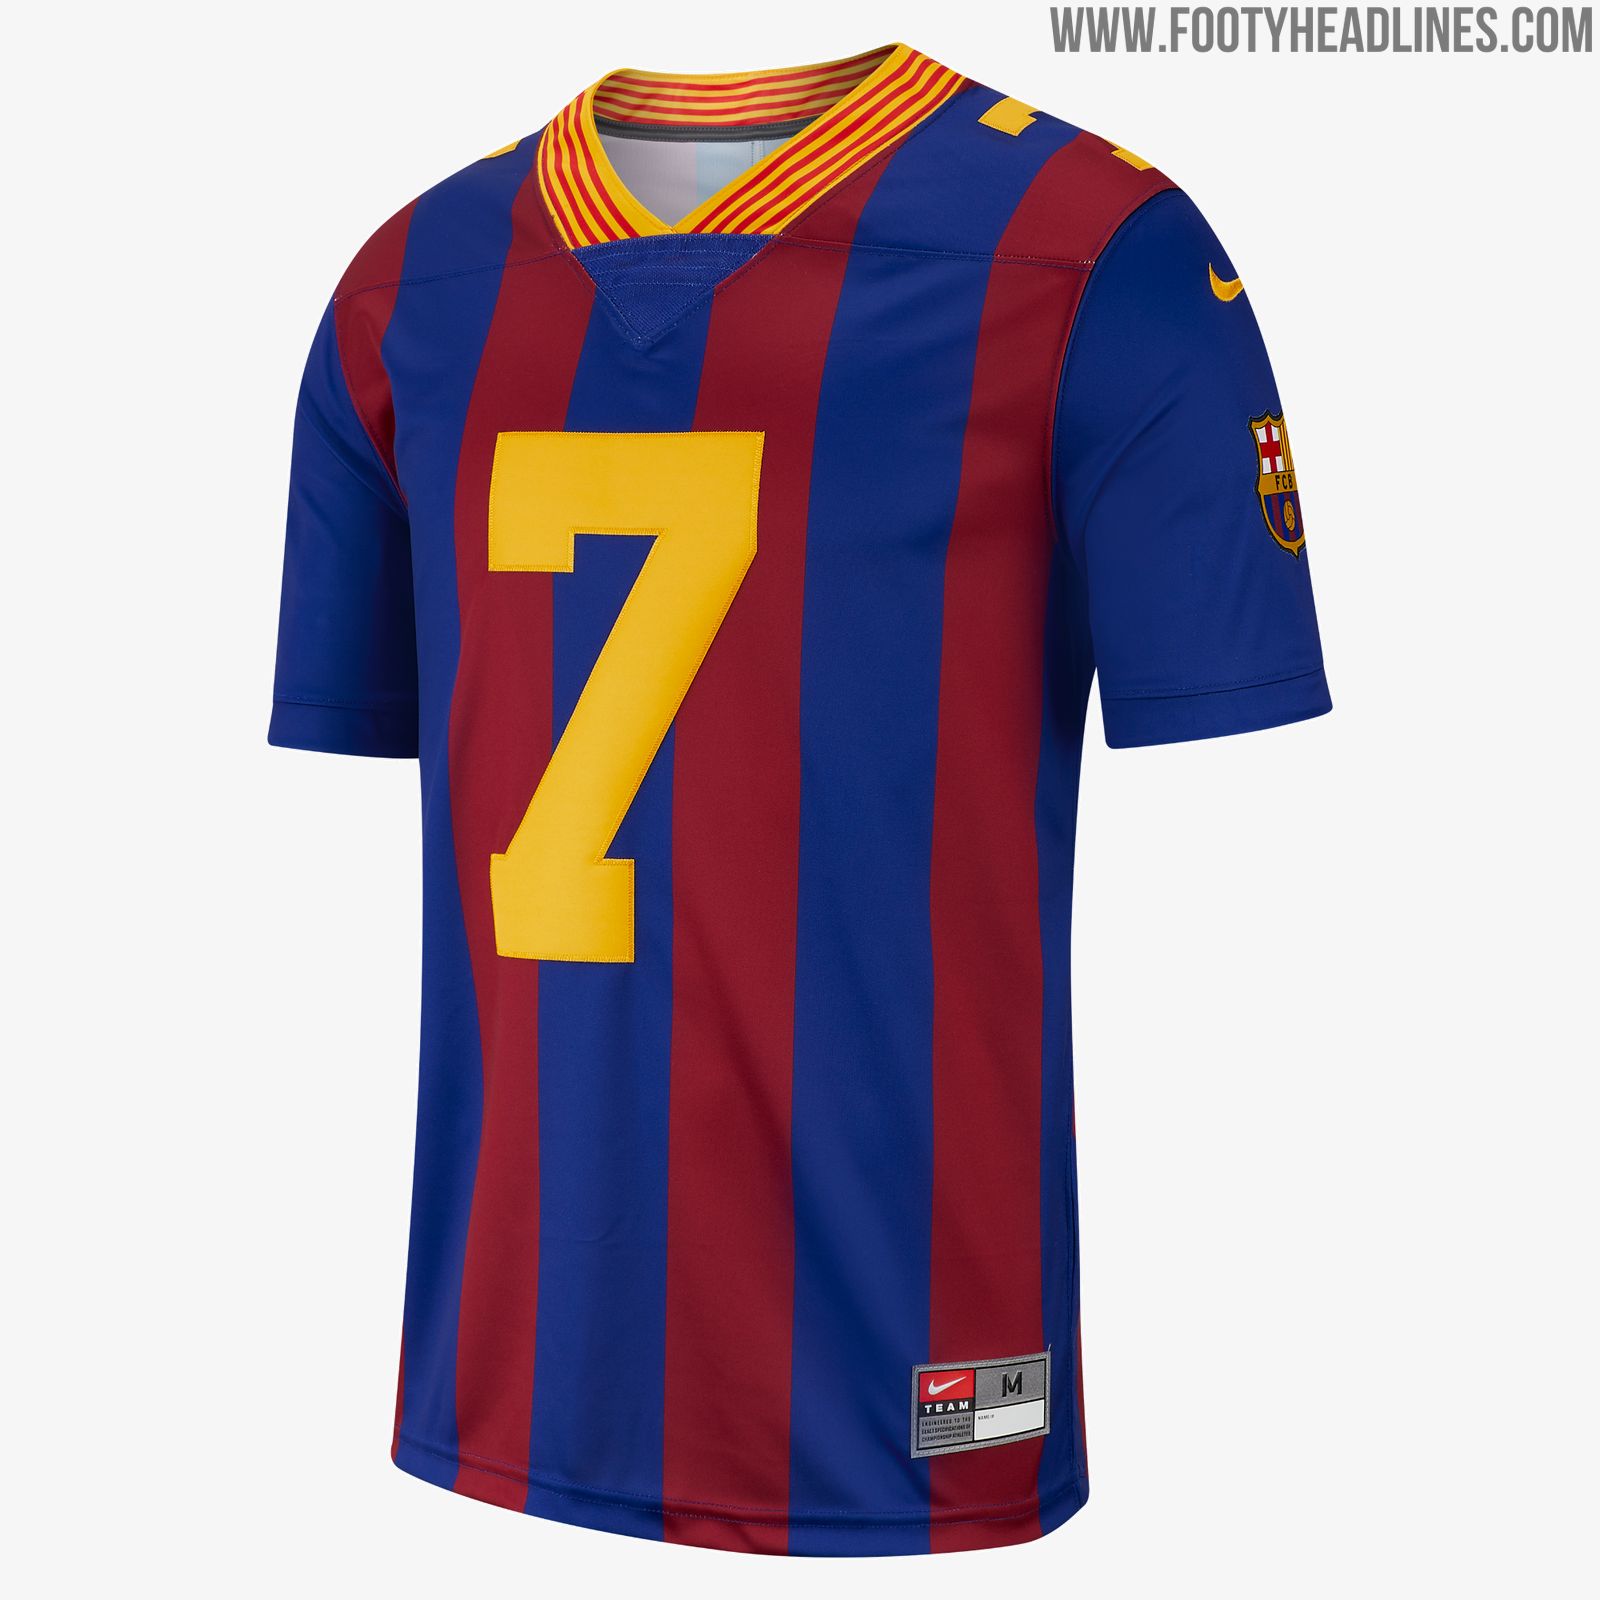 limited-edition-nike-fc-barcelona-american-football-jersey-2.jpg